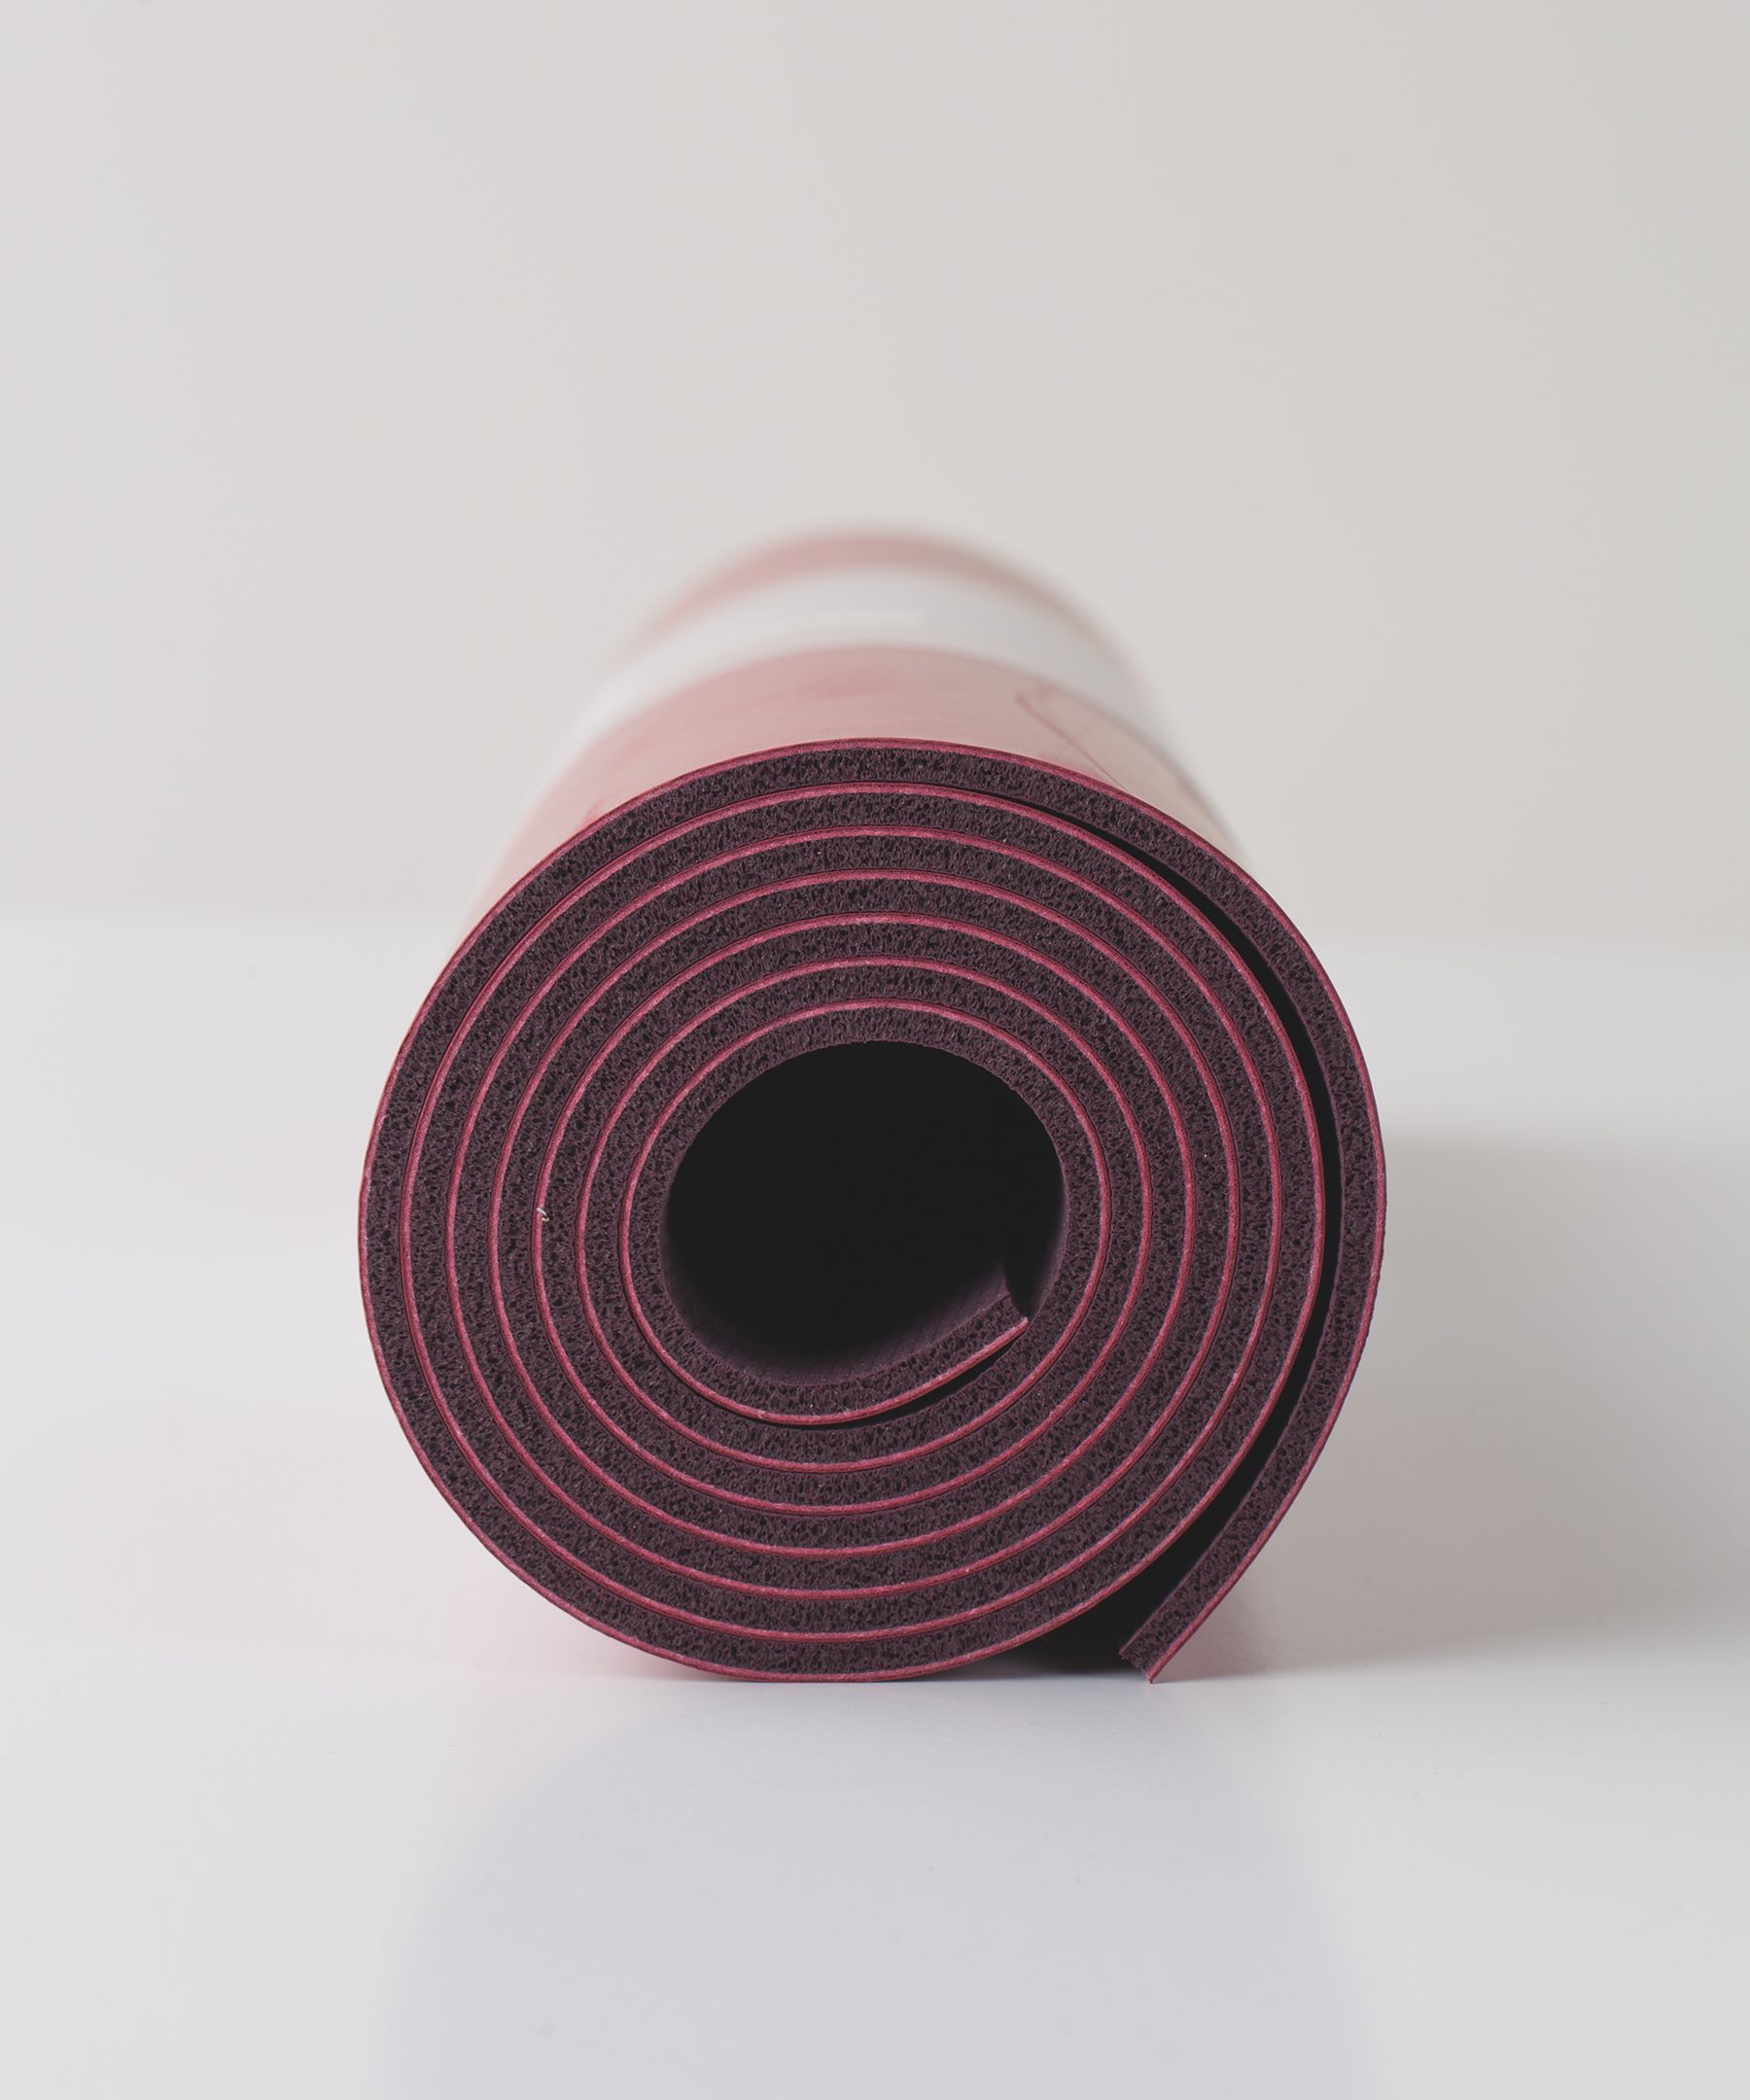 lululemon yoga mat 5mm